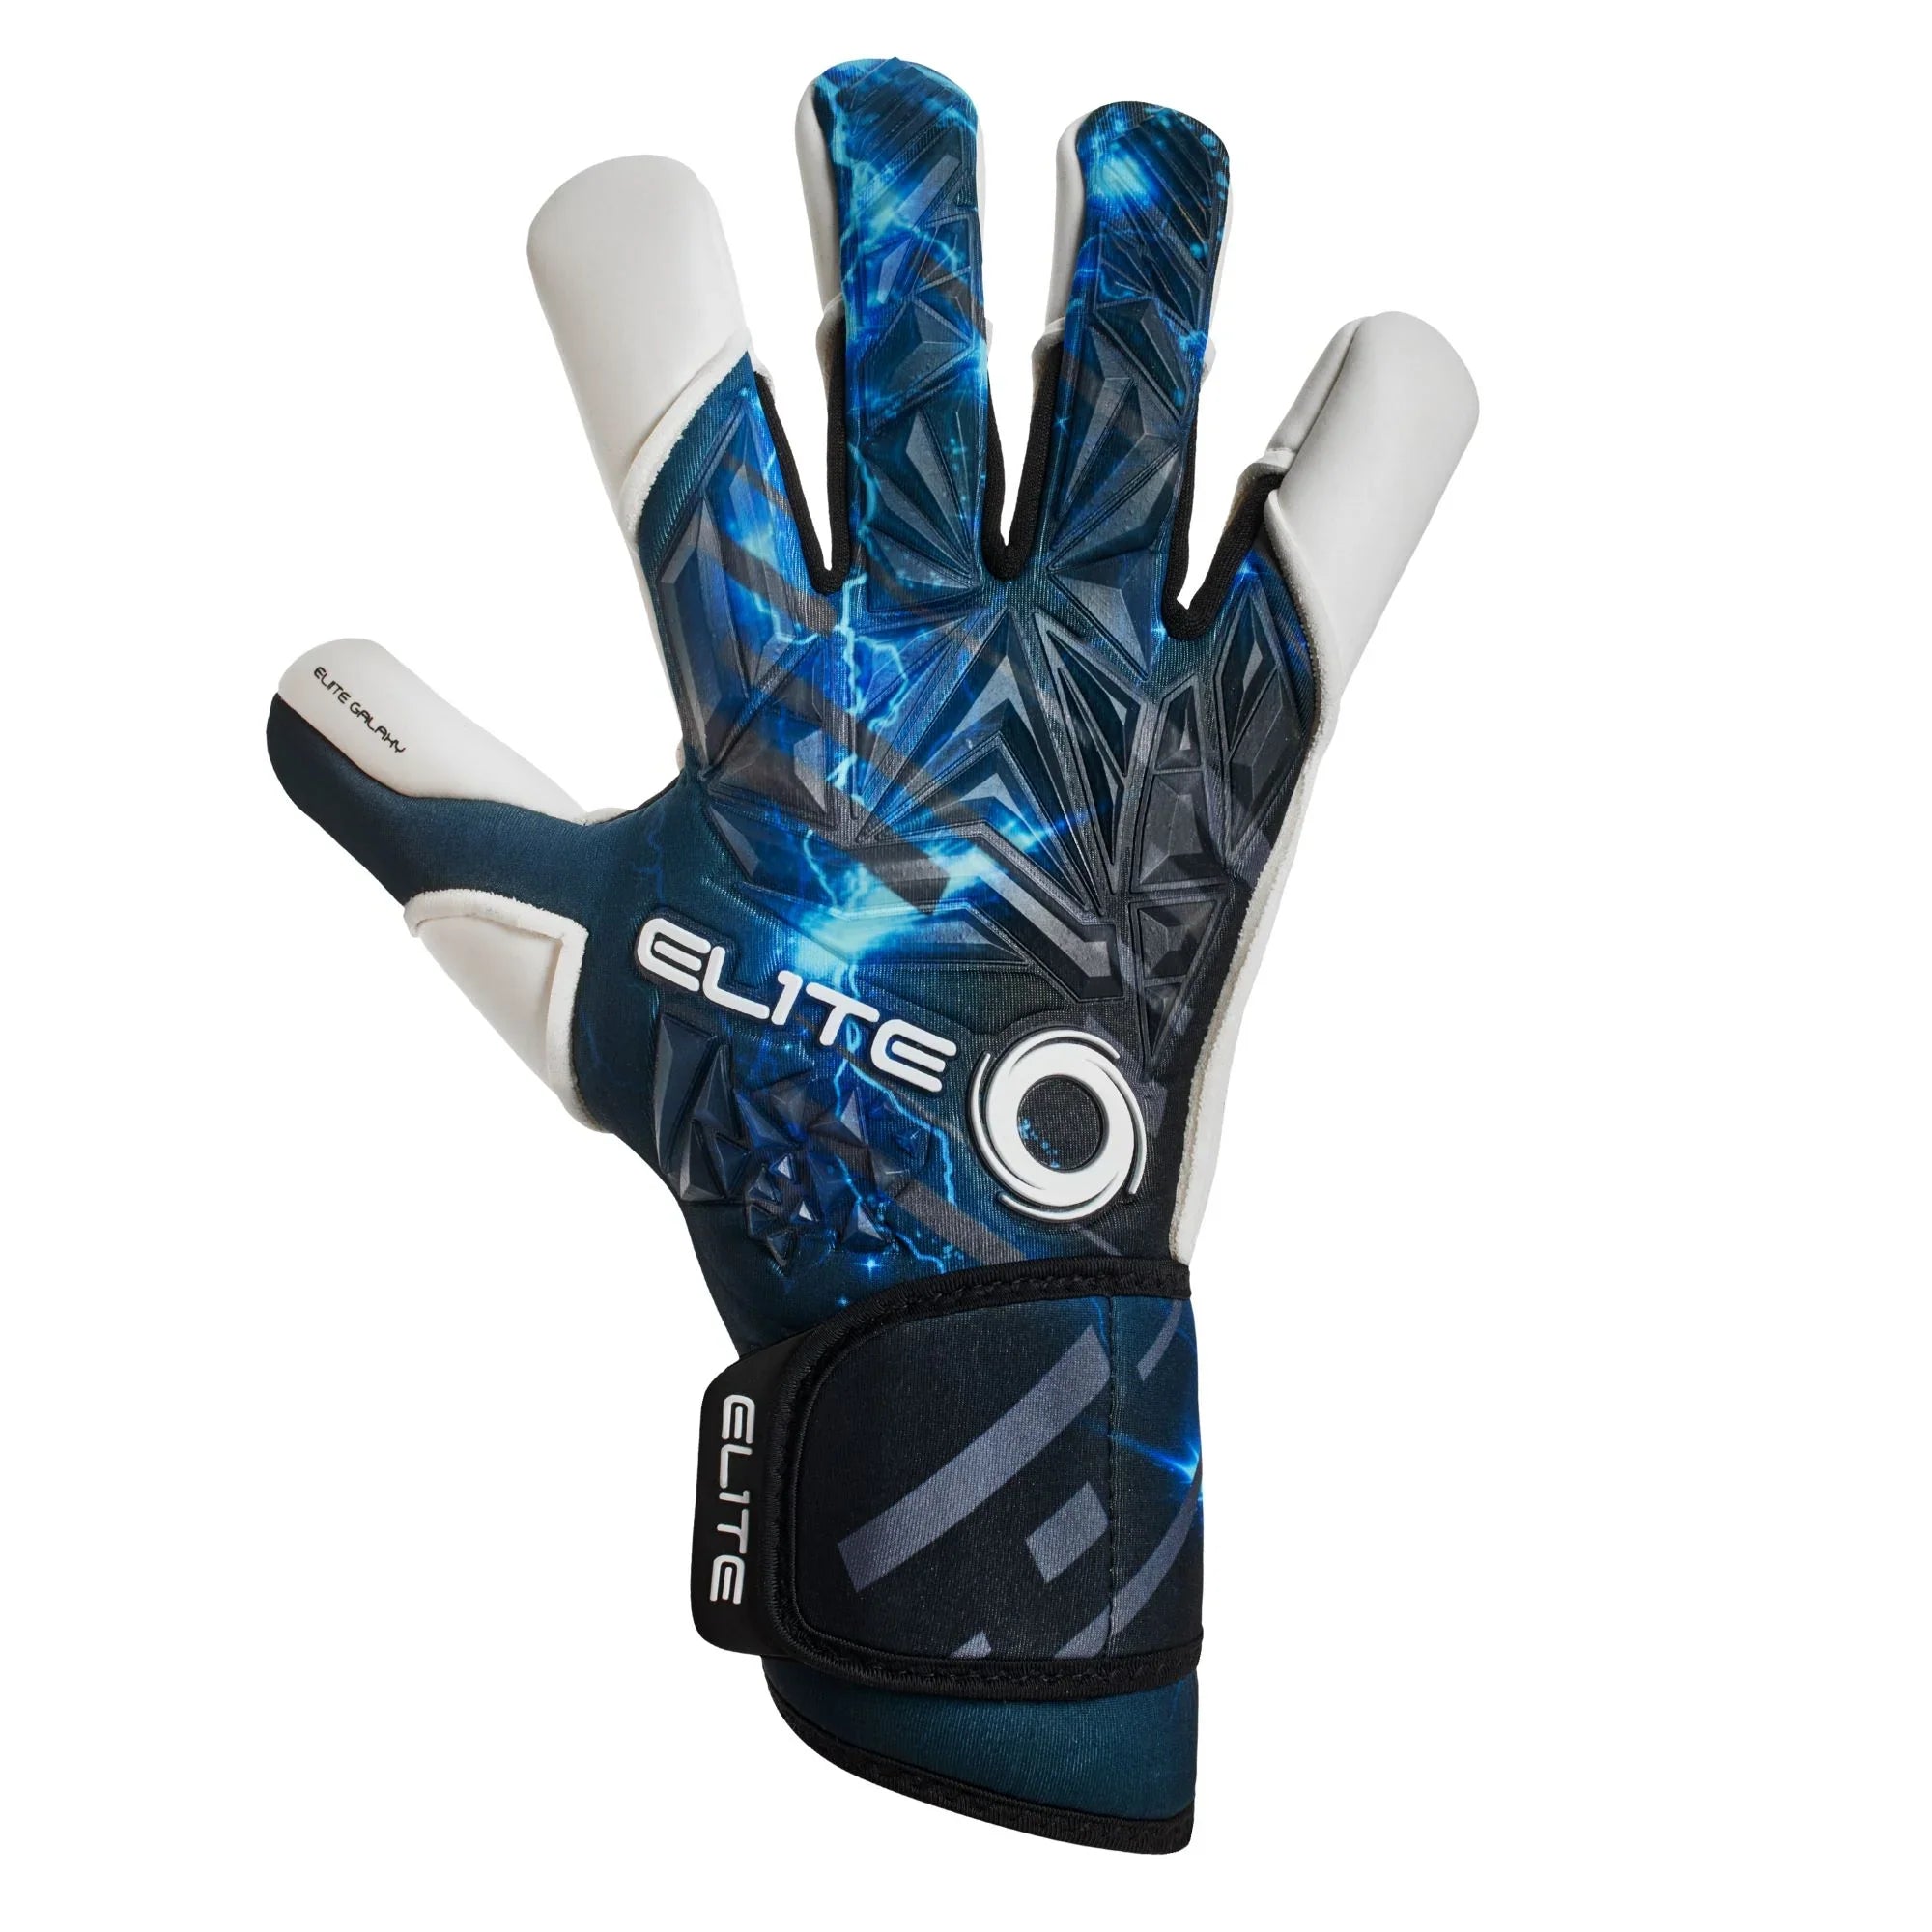 Elite Sport Galaxi Goalkeeper Gloves White